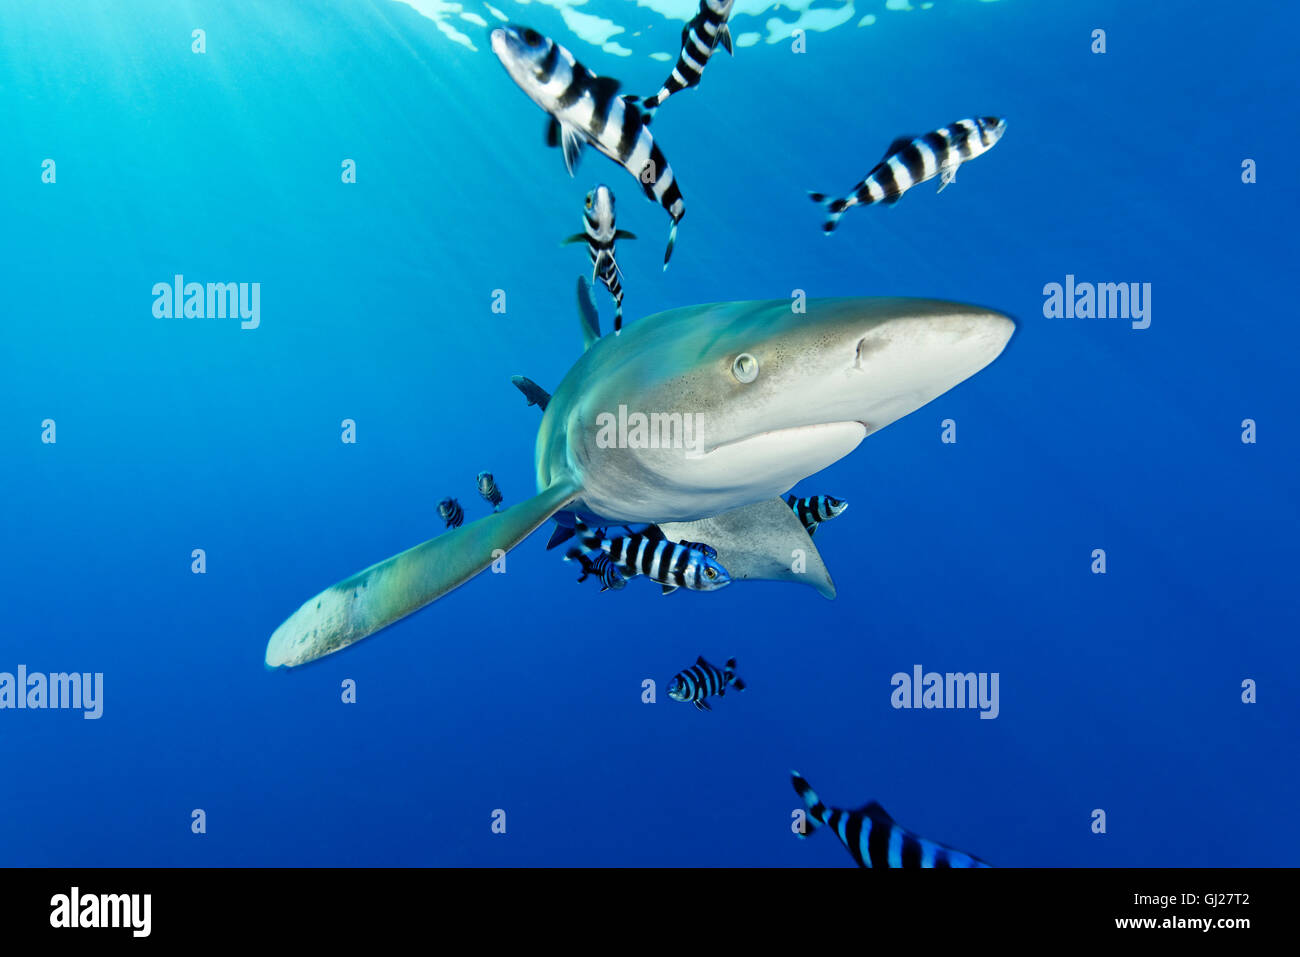 Carcharhinus longimanus Naucrates ductor, Oceanic whitetip shark with pilot fish, pilotfish, Daedalus Reef, Red Sea, Egypt Stock Photo